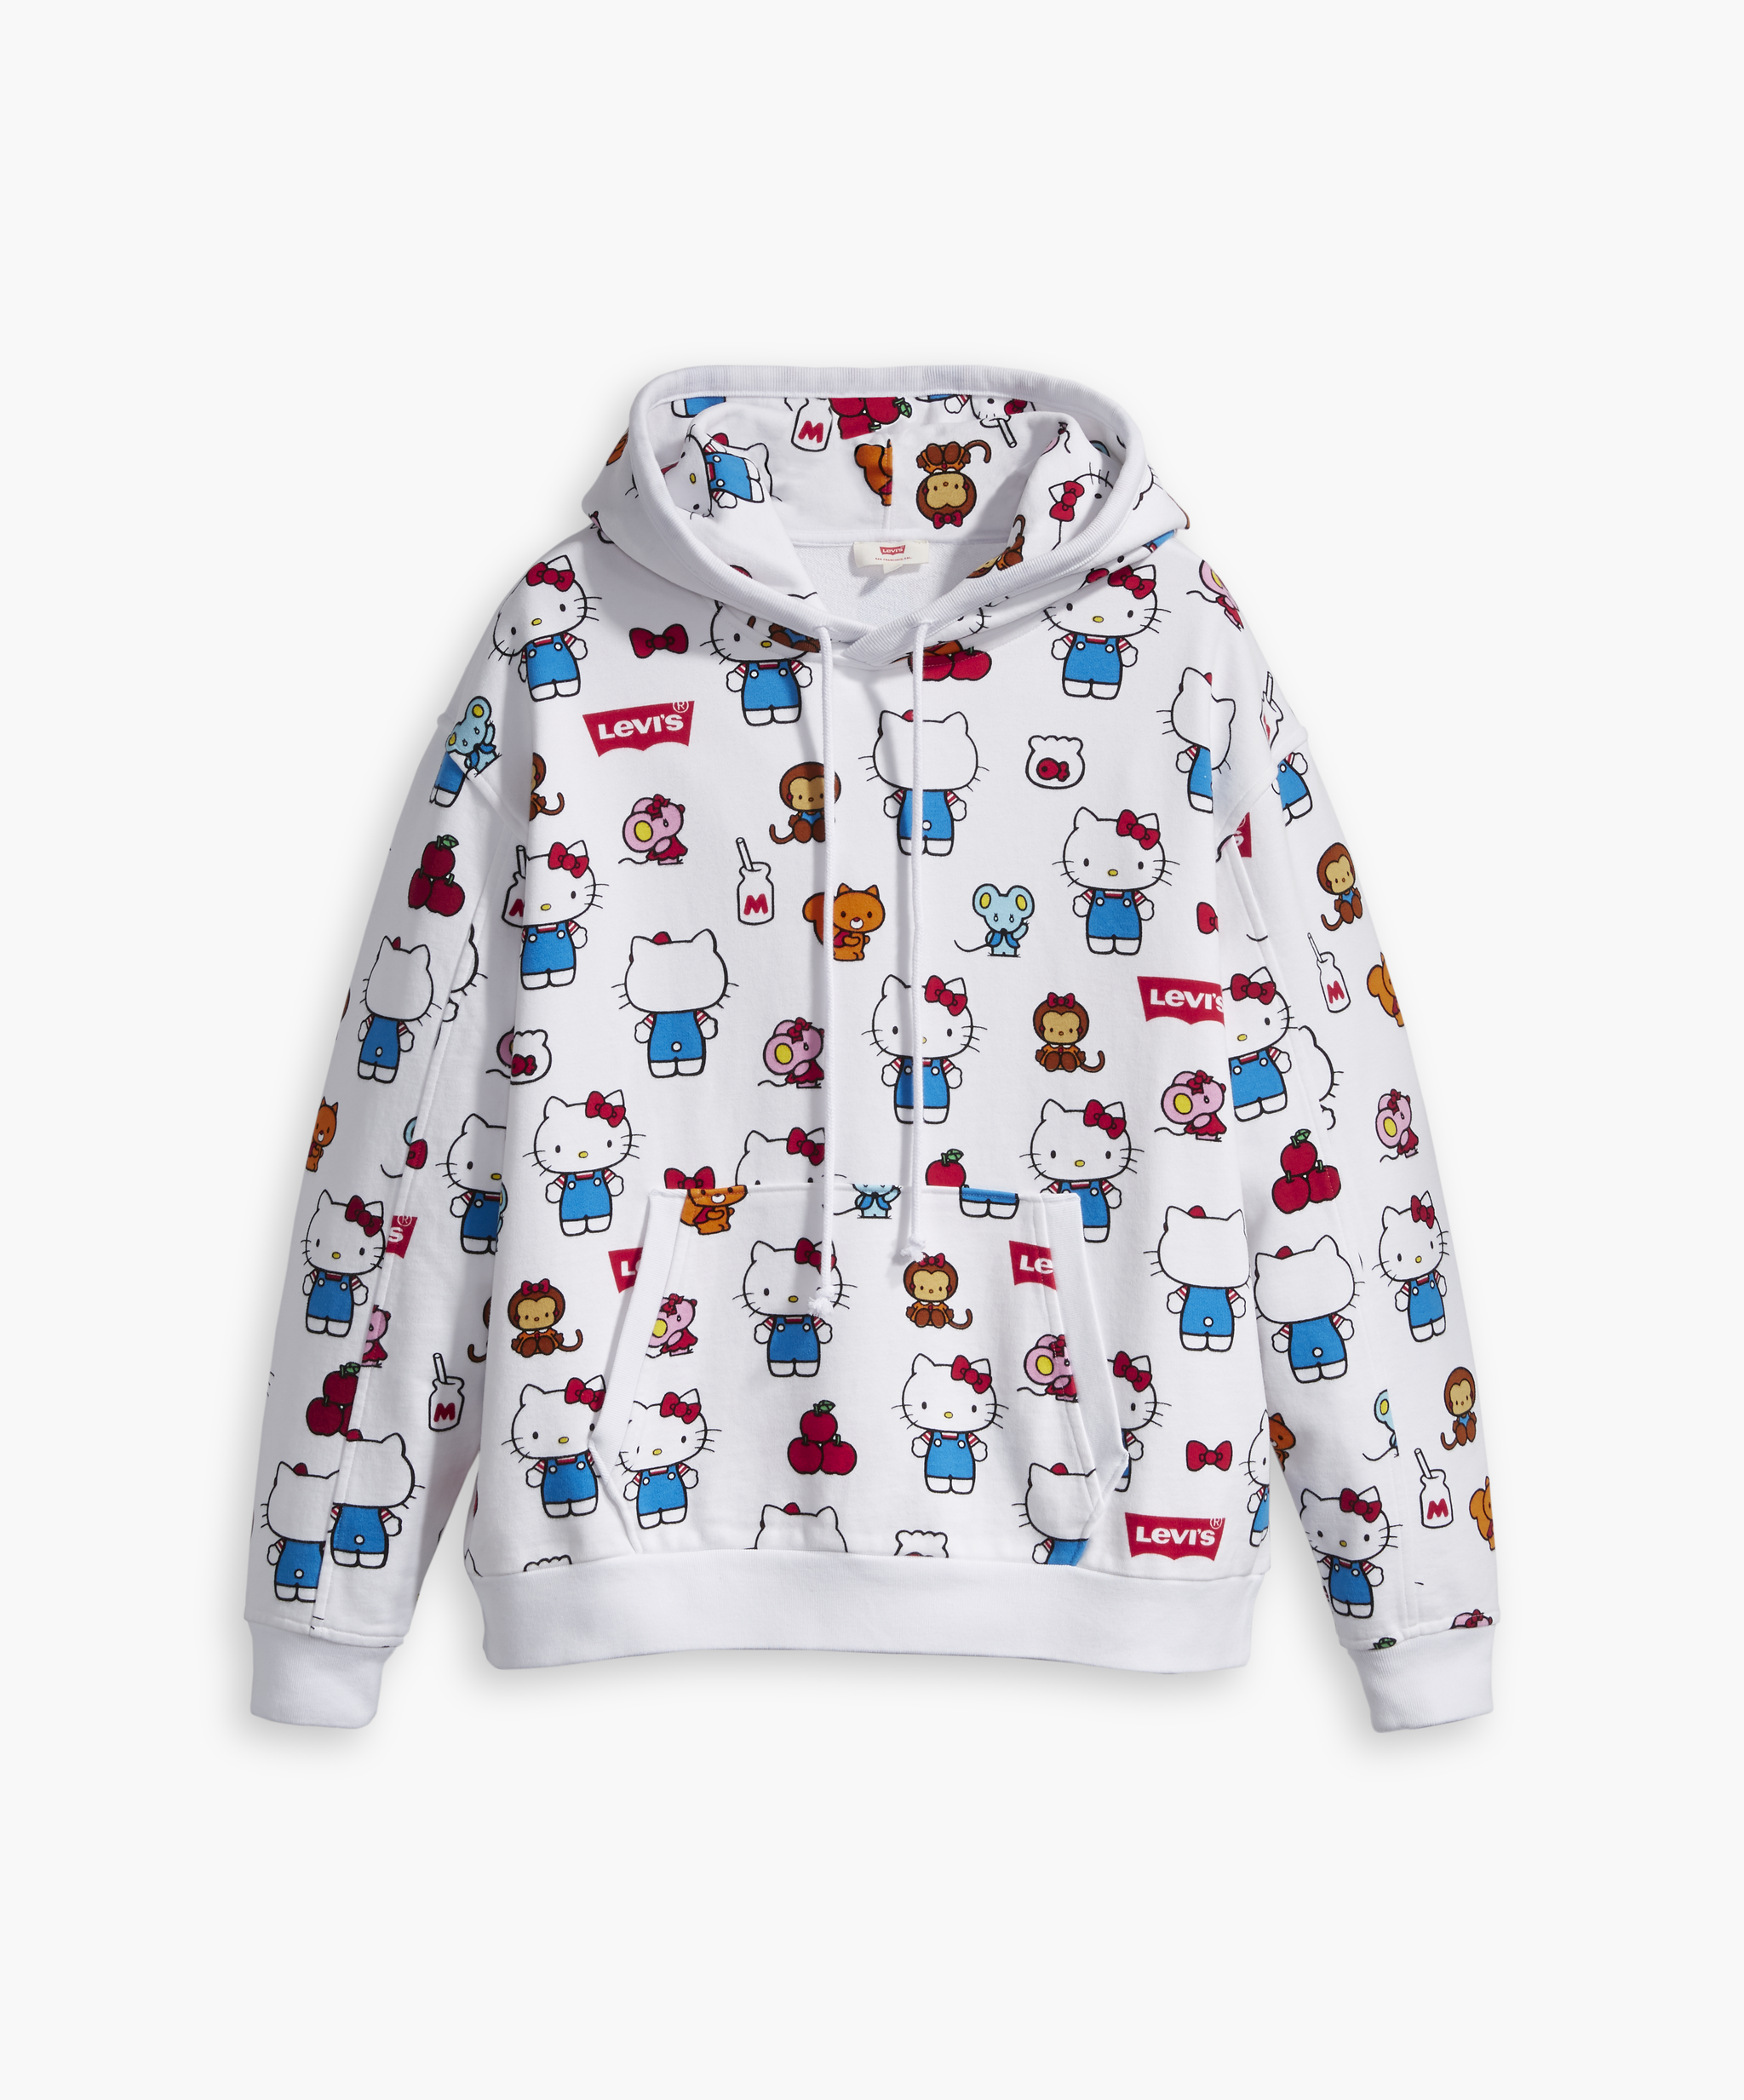 Levi's Hello Kitty Clothing Collection 2019 | POPSUGAR Fashion